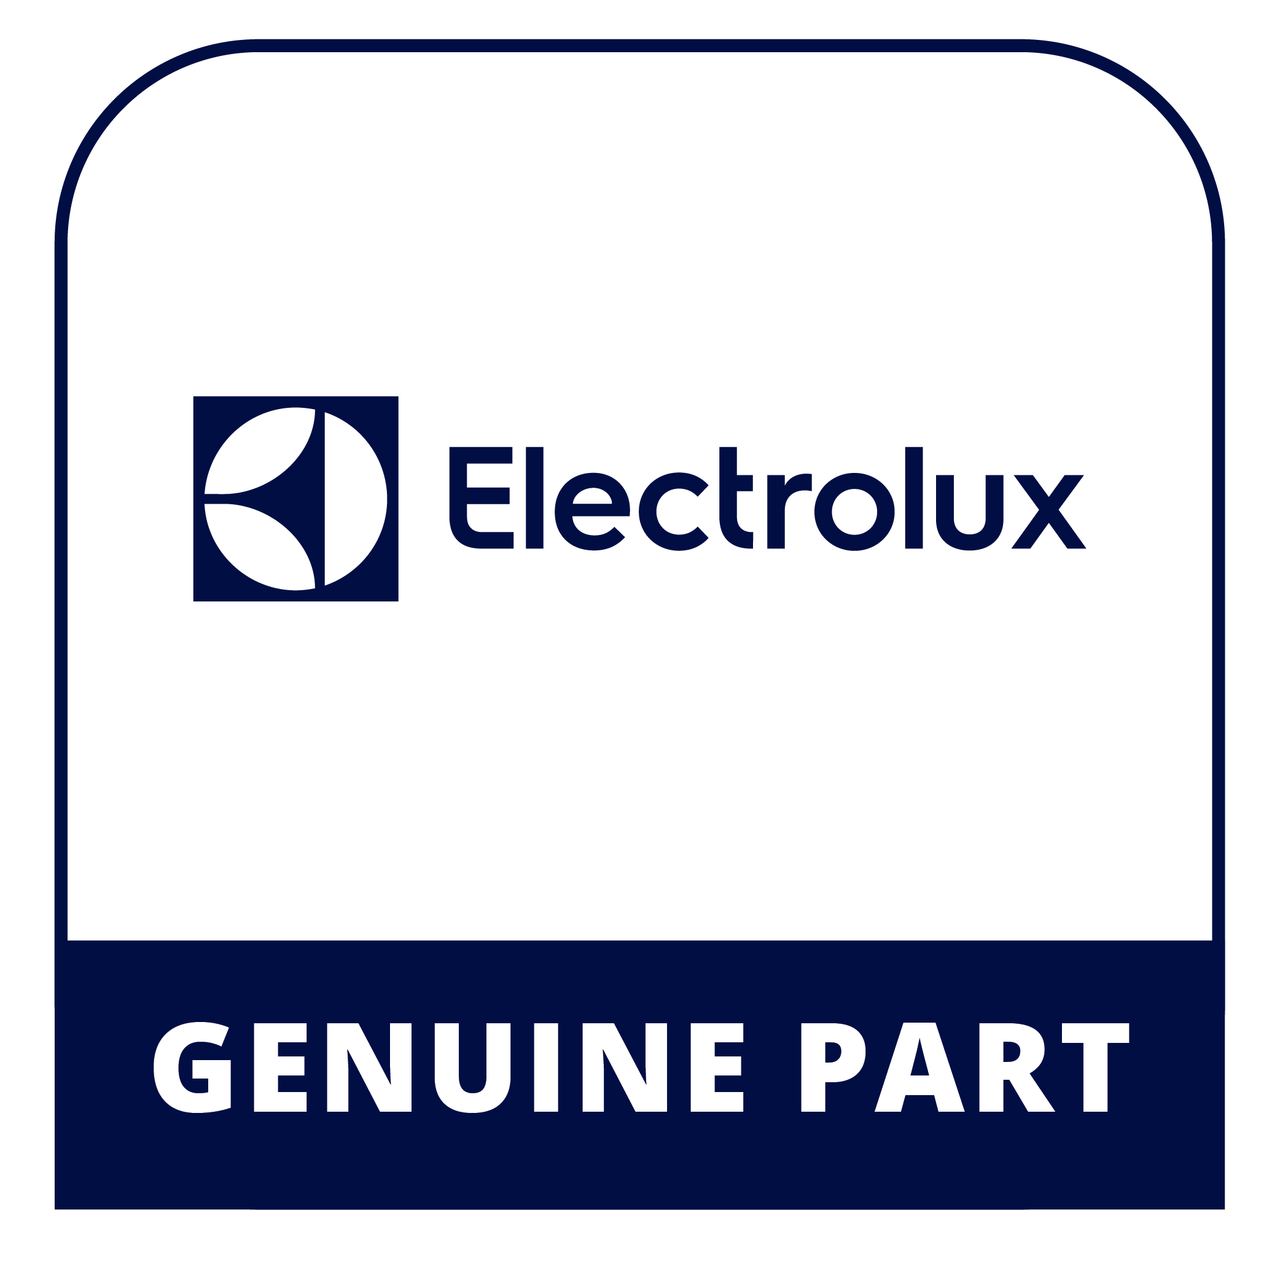 Frigidaire - Electrolux 5304498739 Holder - Genuine Electrolux Part